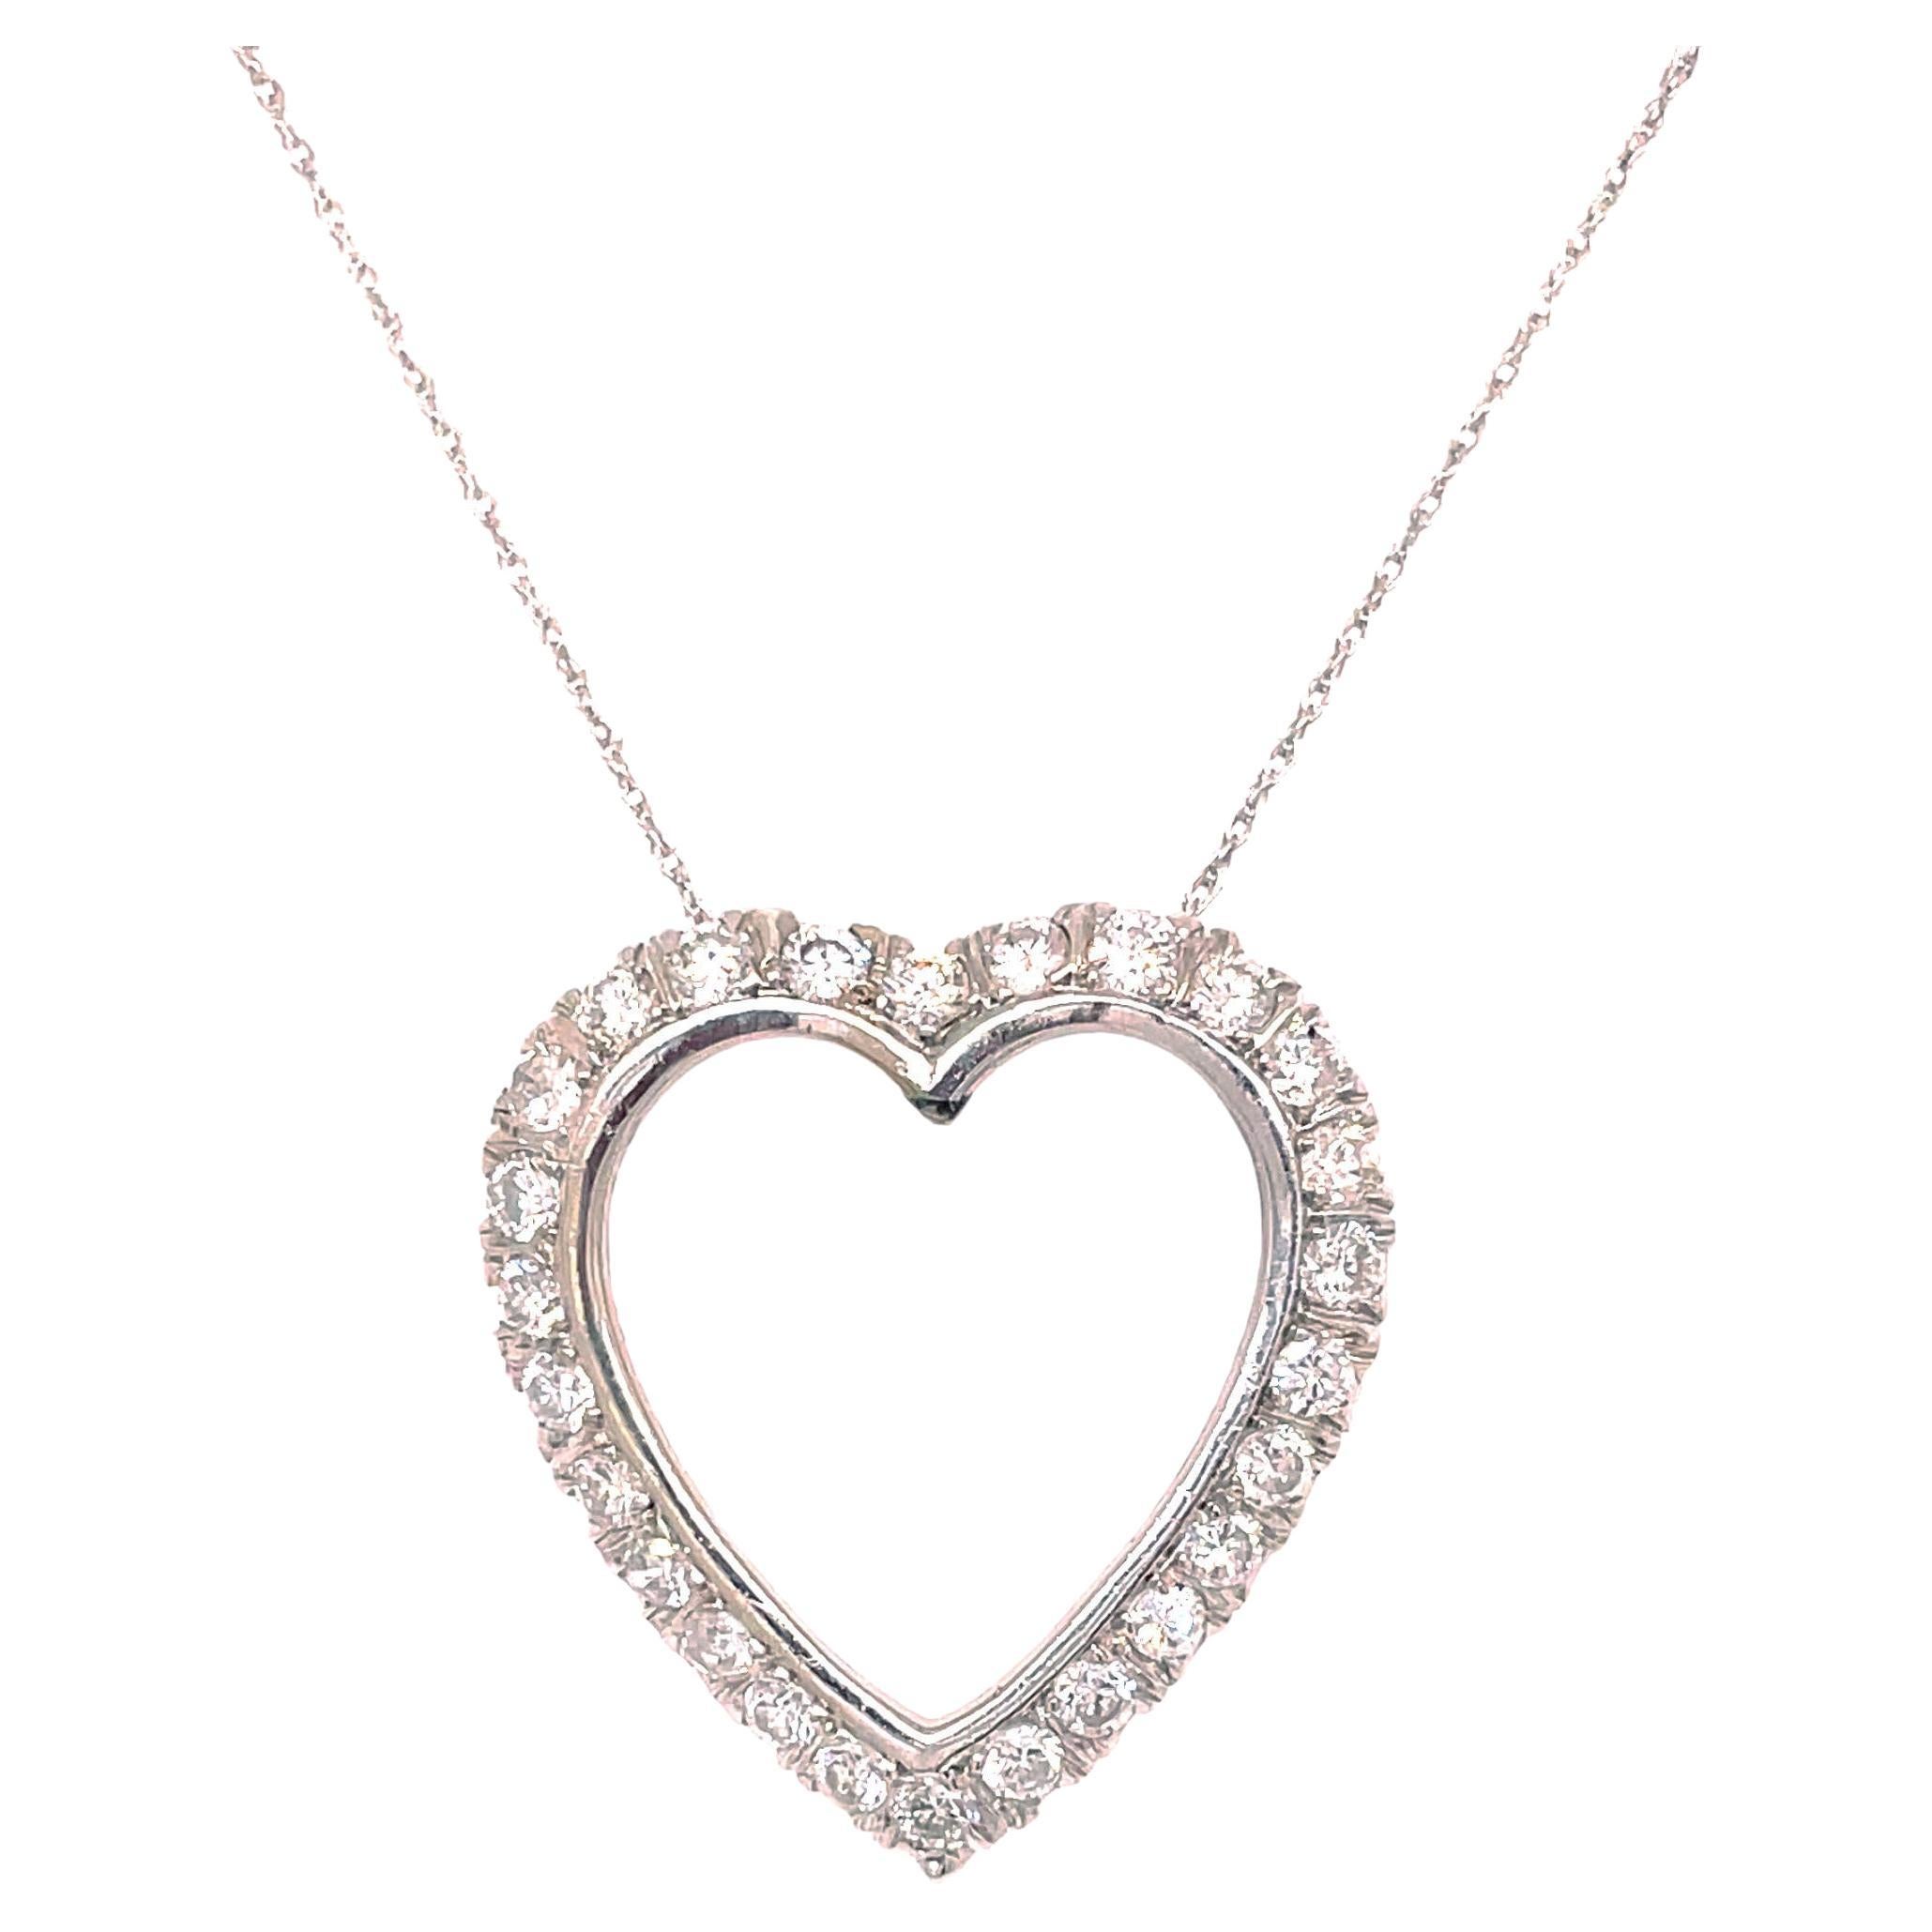 1950s White Gold Diamond Heart Pendant Necklace For Sale